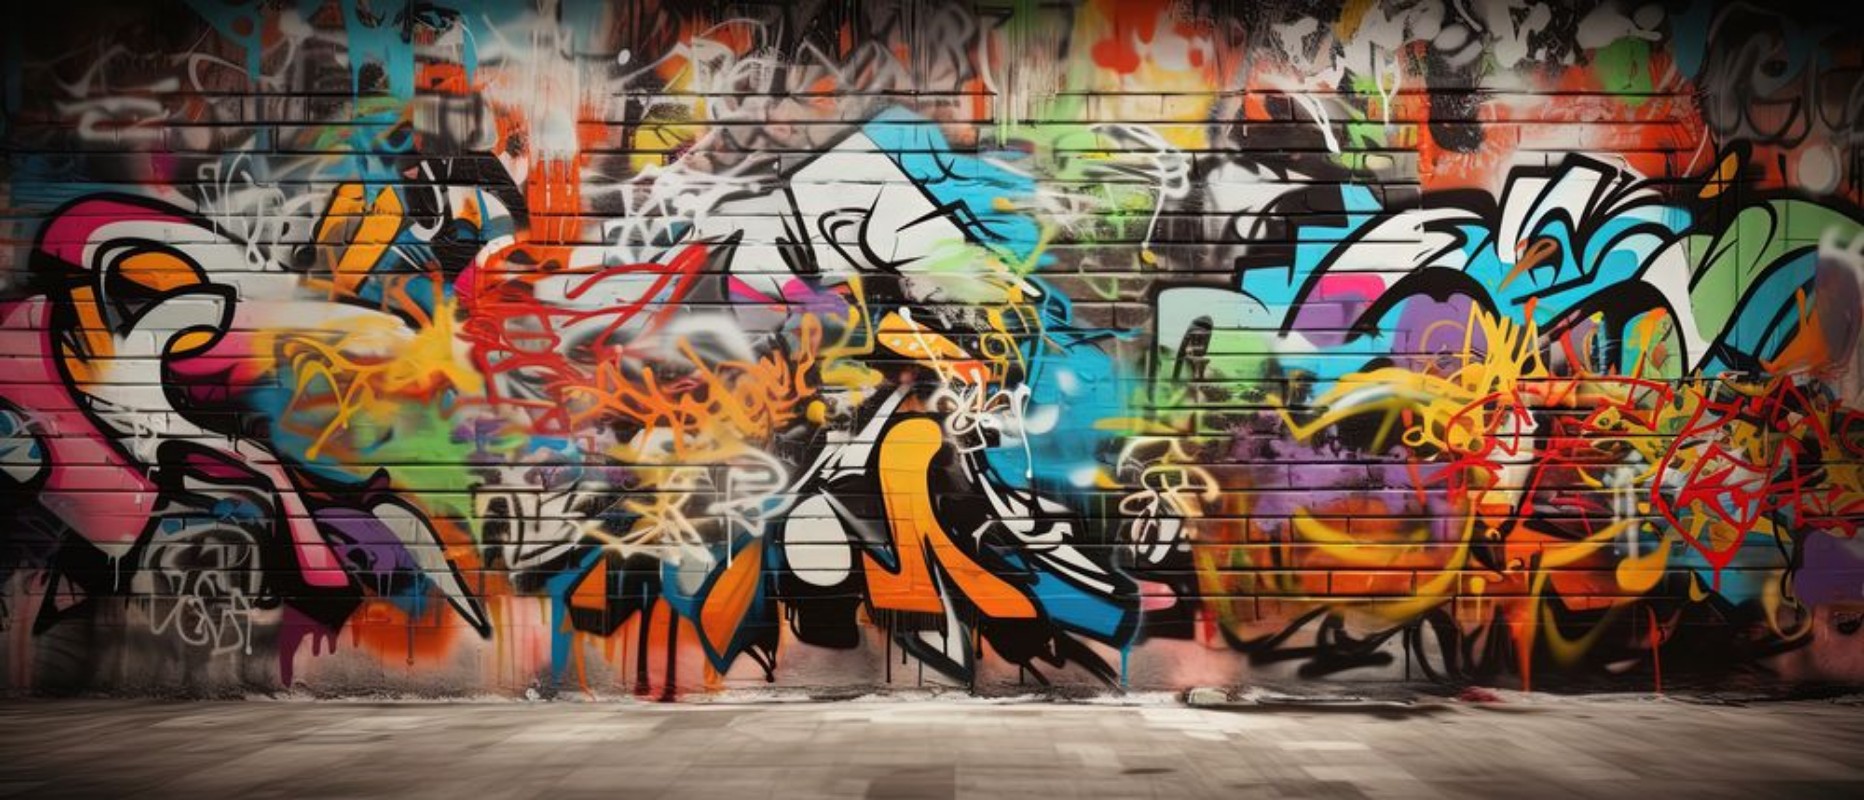 Afbeeldingen van Graffiti Wall